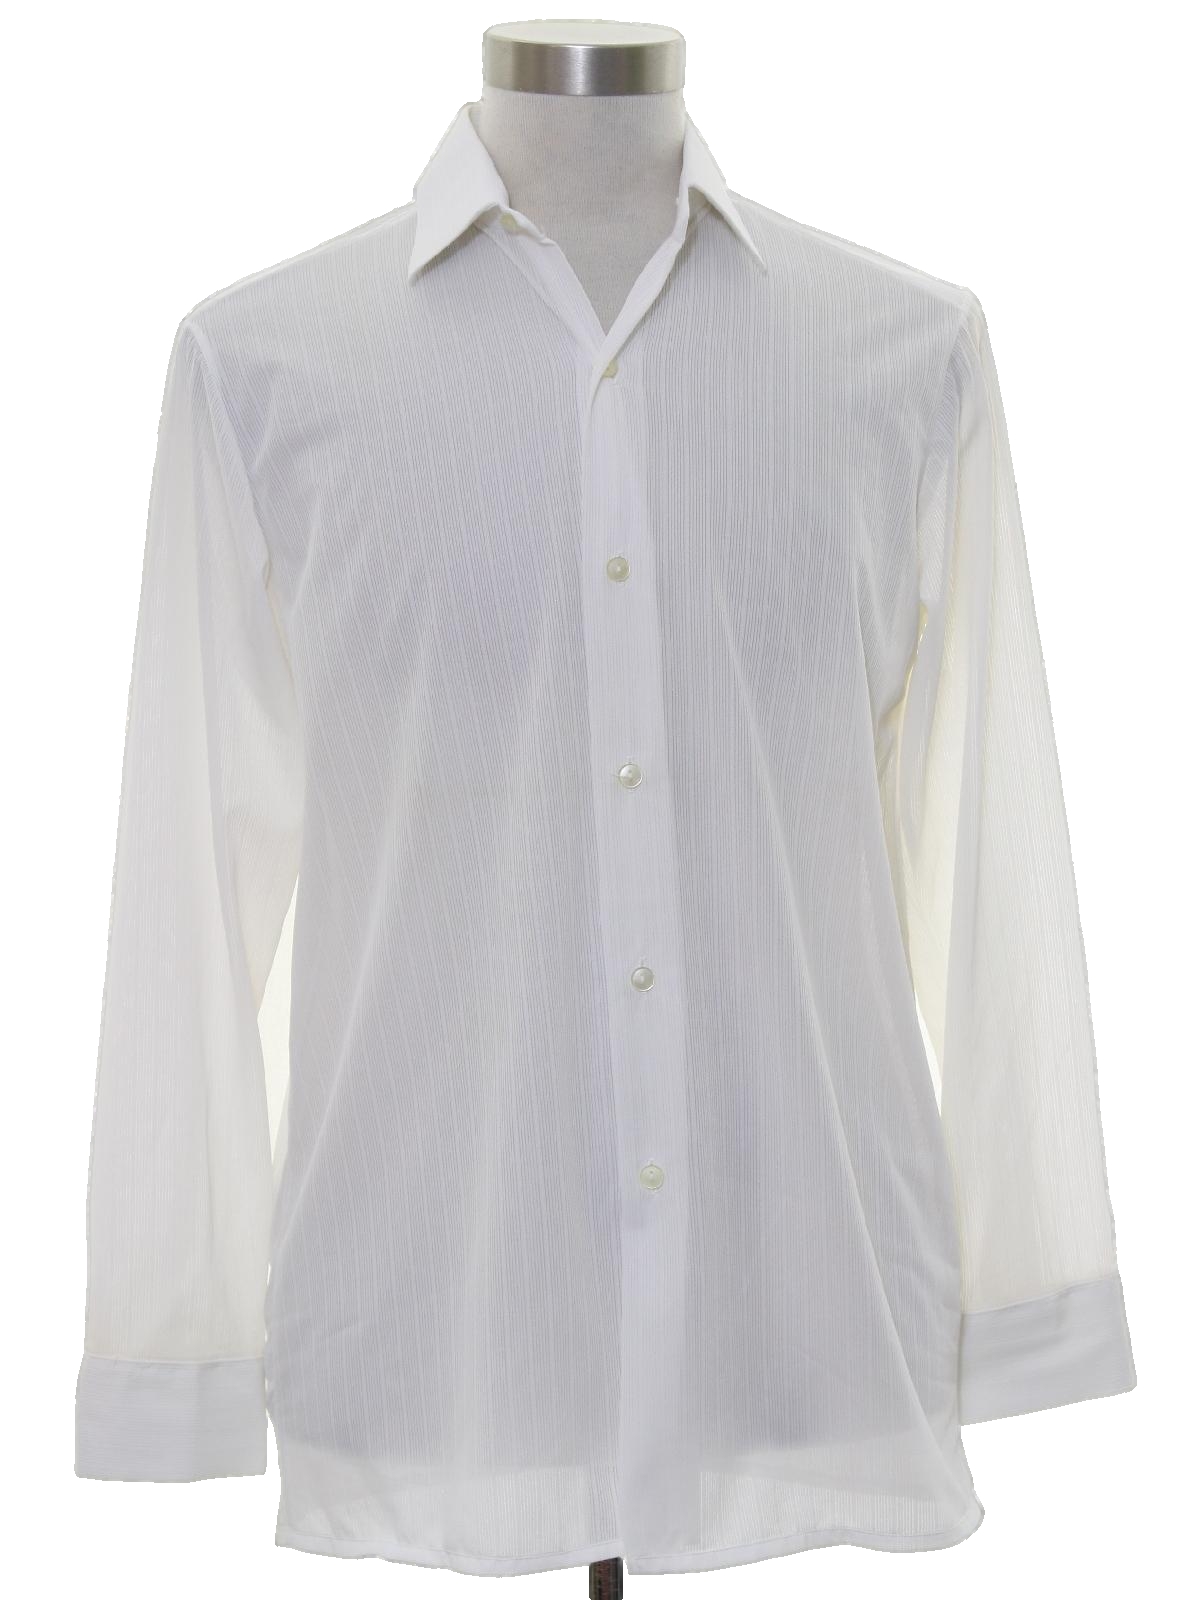 1960's Retro Shirt: Early 60s -No Label- Mens white ribbed nylon mod ...